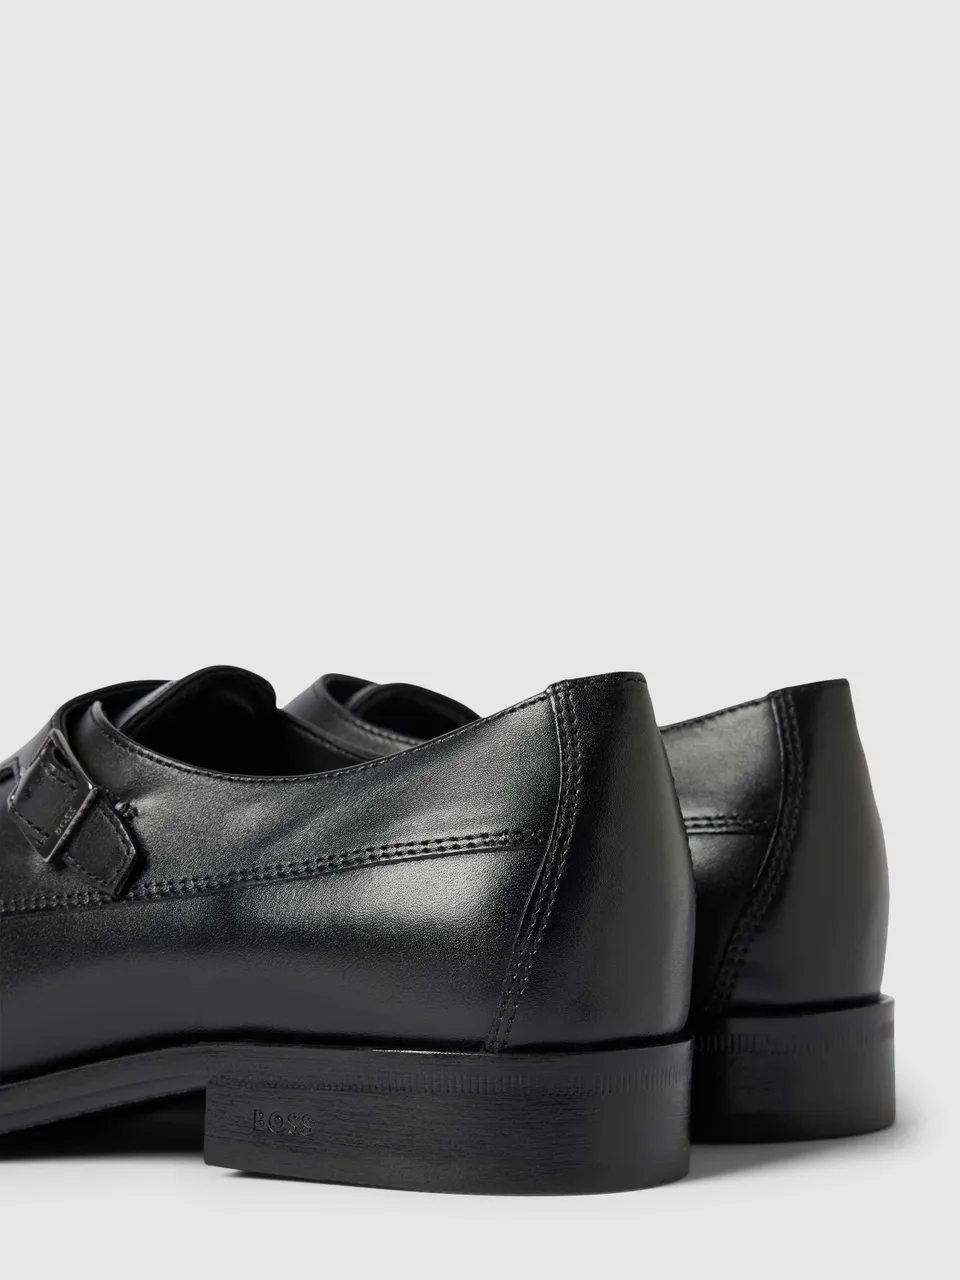 Schuh aus Leder mit Monk Straps Modell 'Colby'